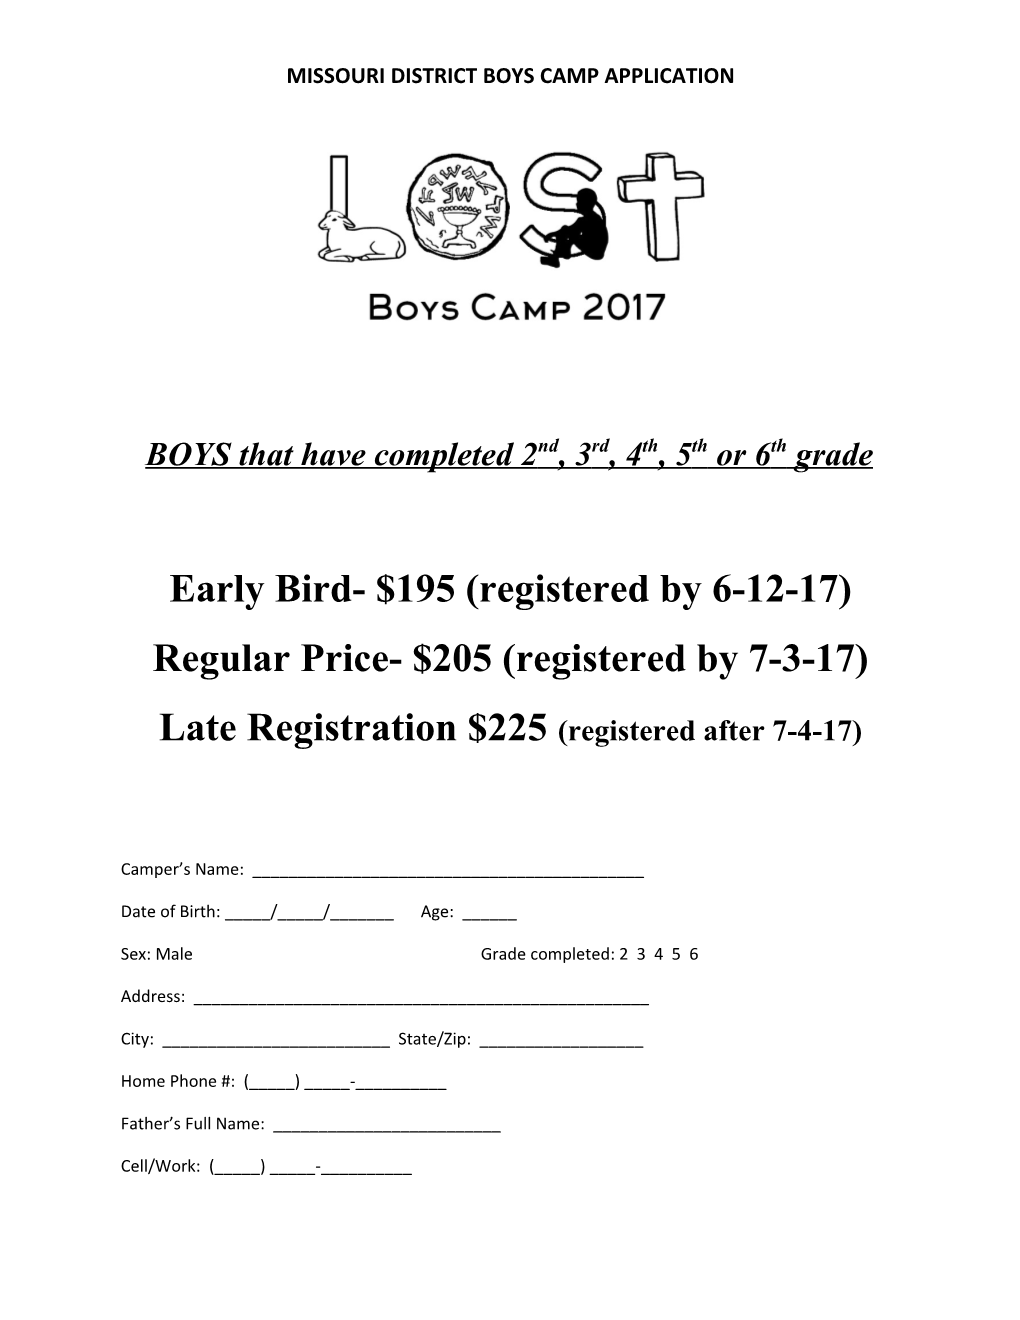 Missouri District Boys Camp Application